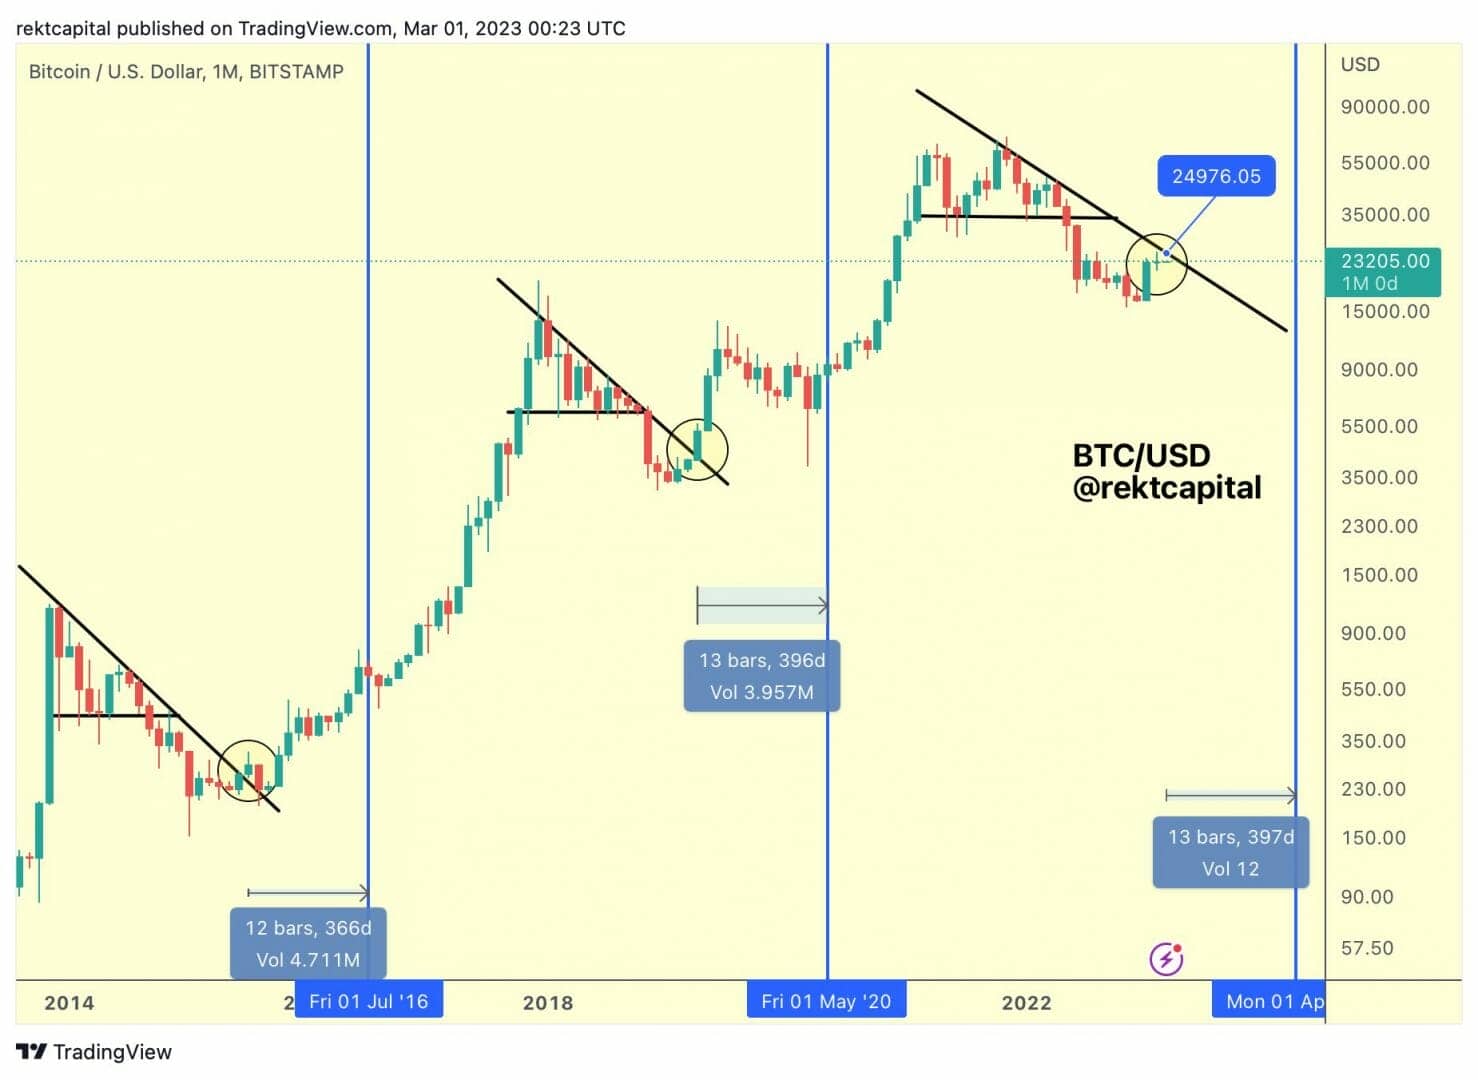 Macro bearish trend line for Bitcoin price